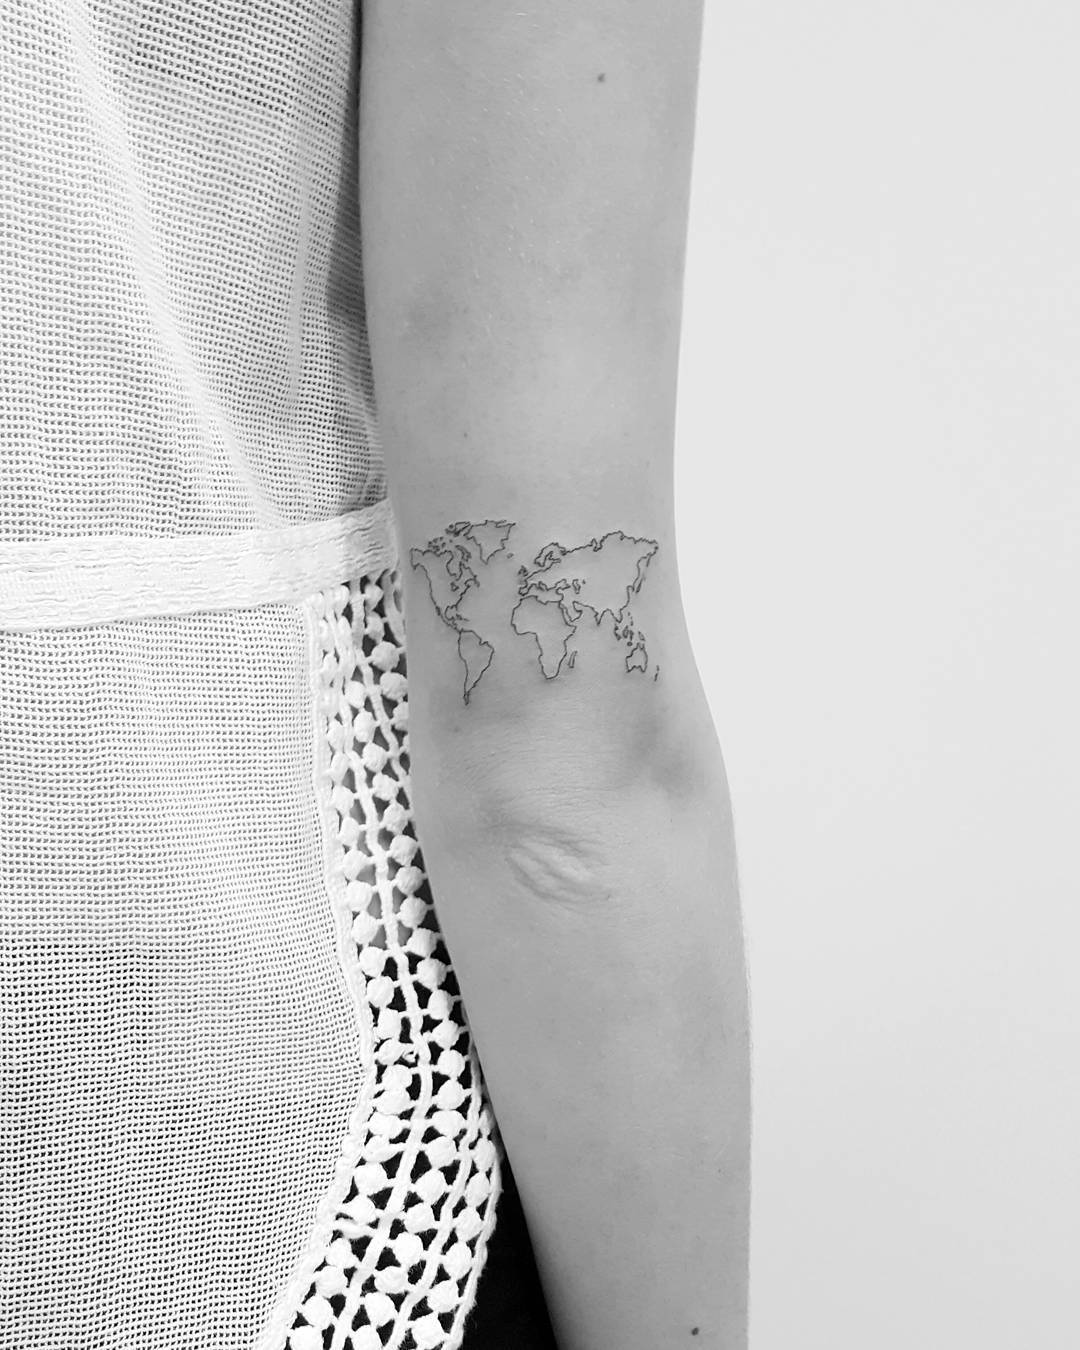 Tatuajes pequeños mapa mundi